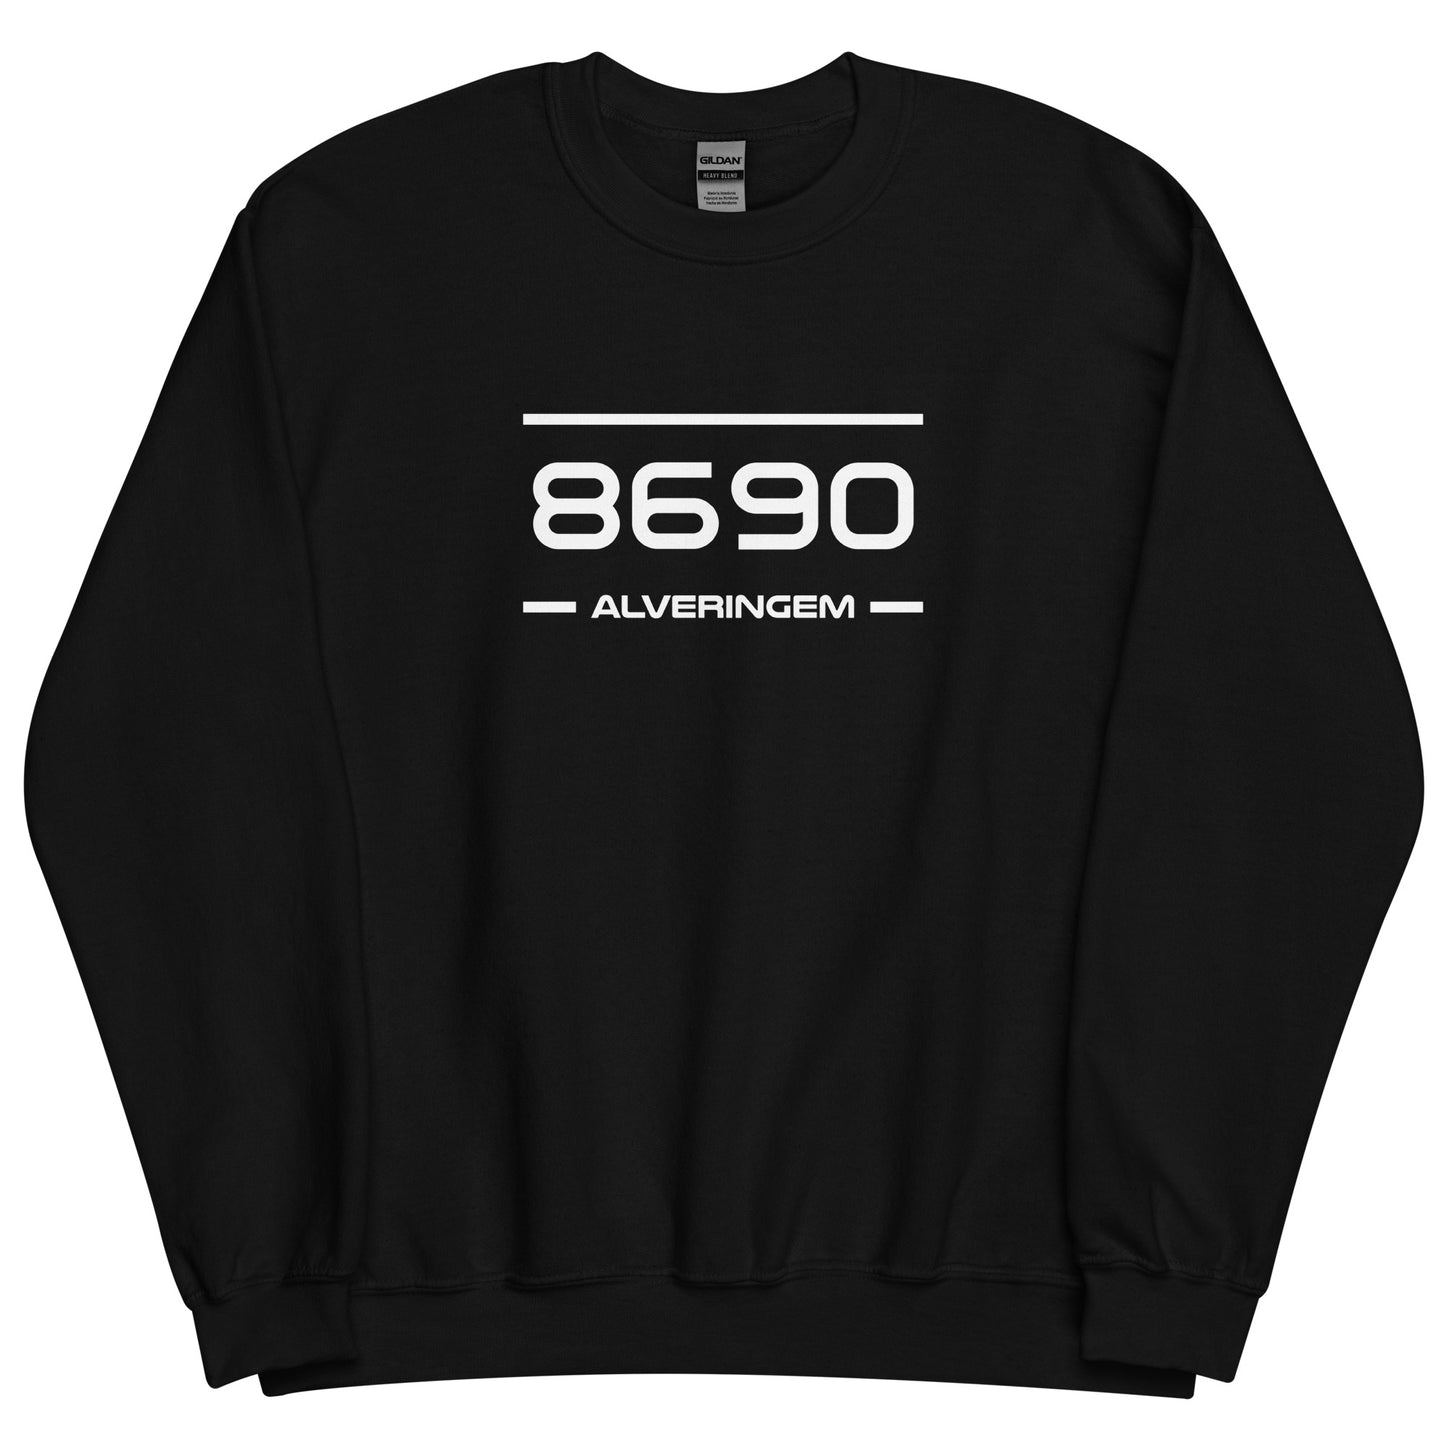 Sweater - 8690 - Alveringem (M/V)